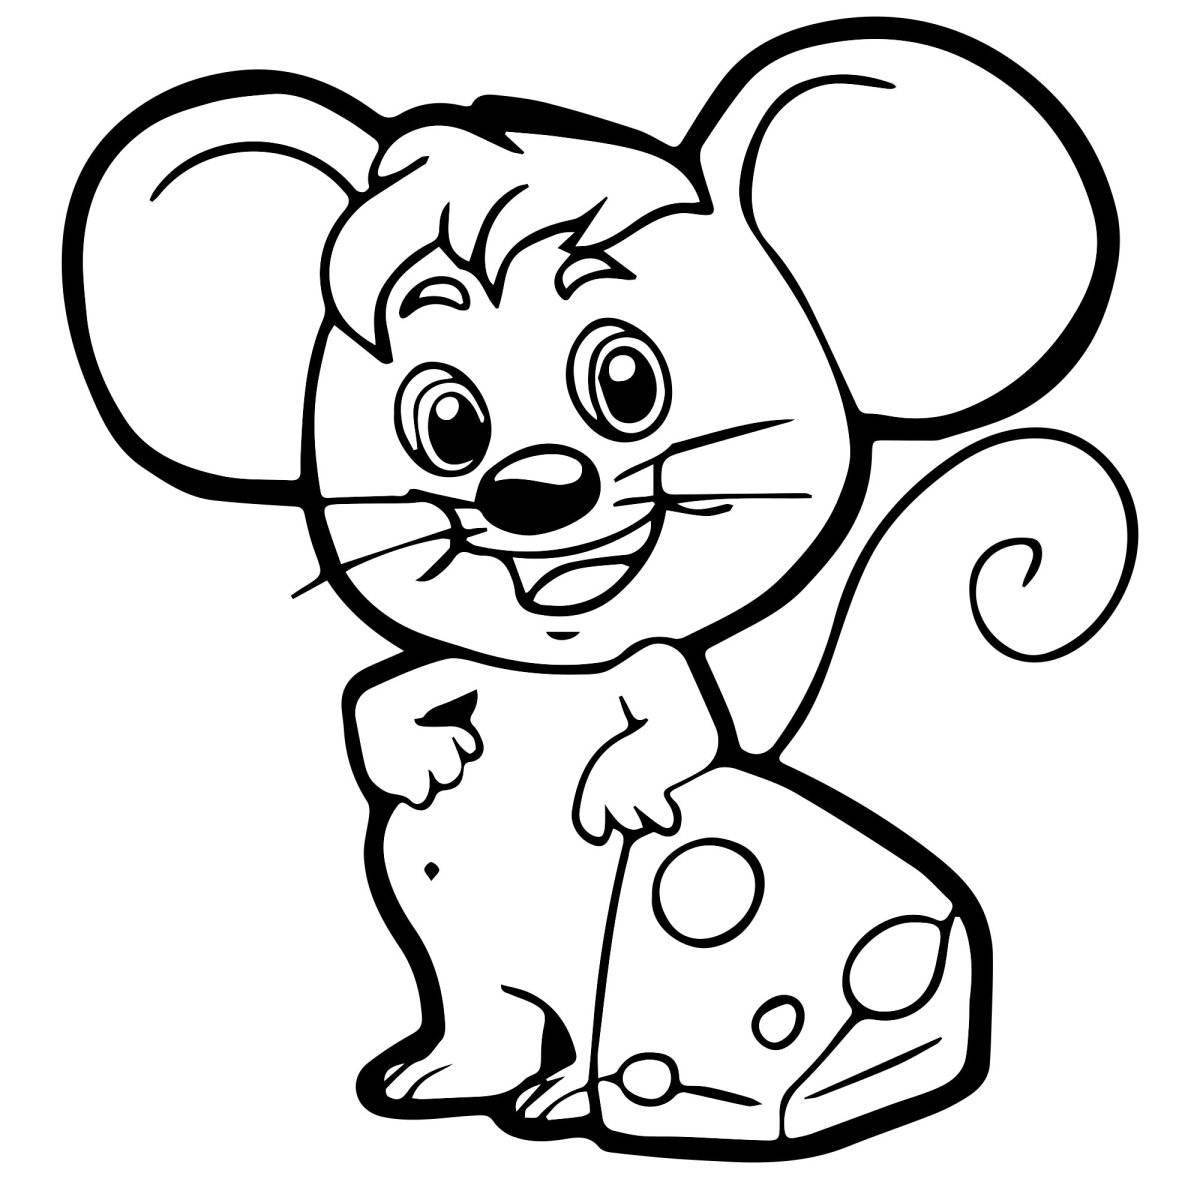 Гламурная раскраска мышь для детей 3-4 лет